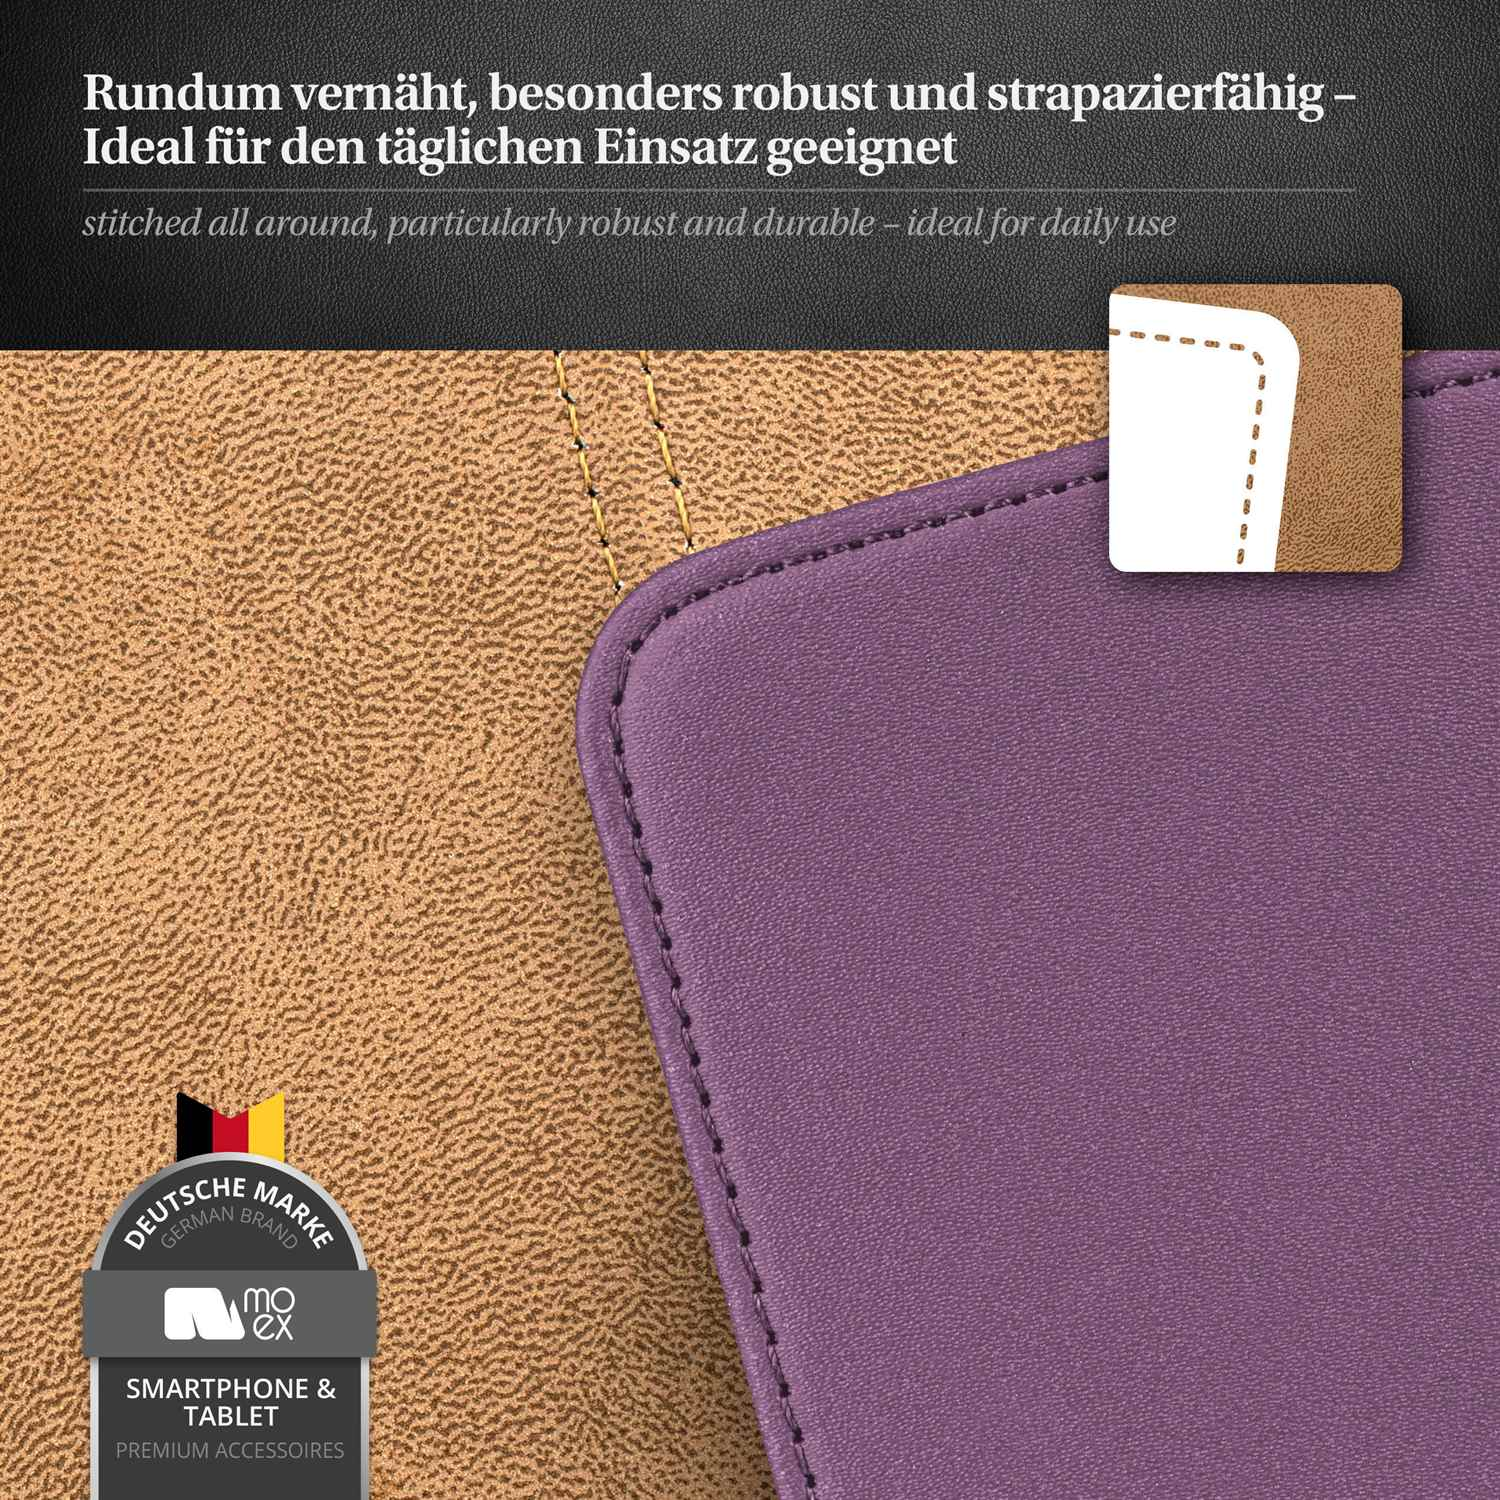 Xperia Indigo-Violet Sony, Compact, Case, Flip MOEX Z1 Flip Cover,